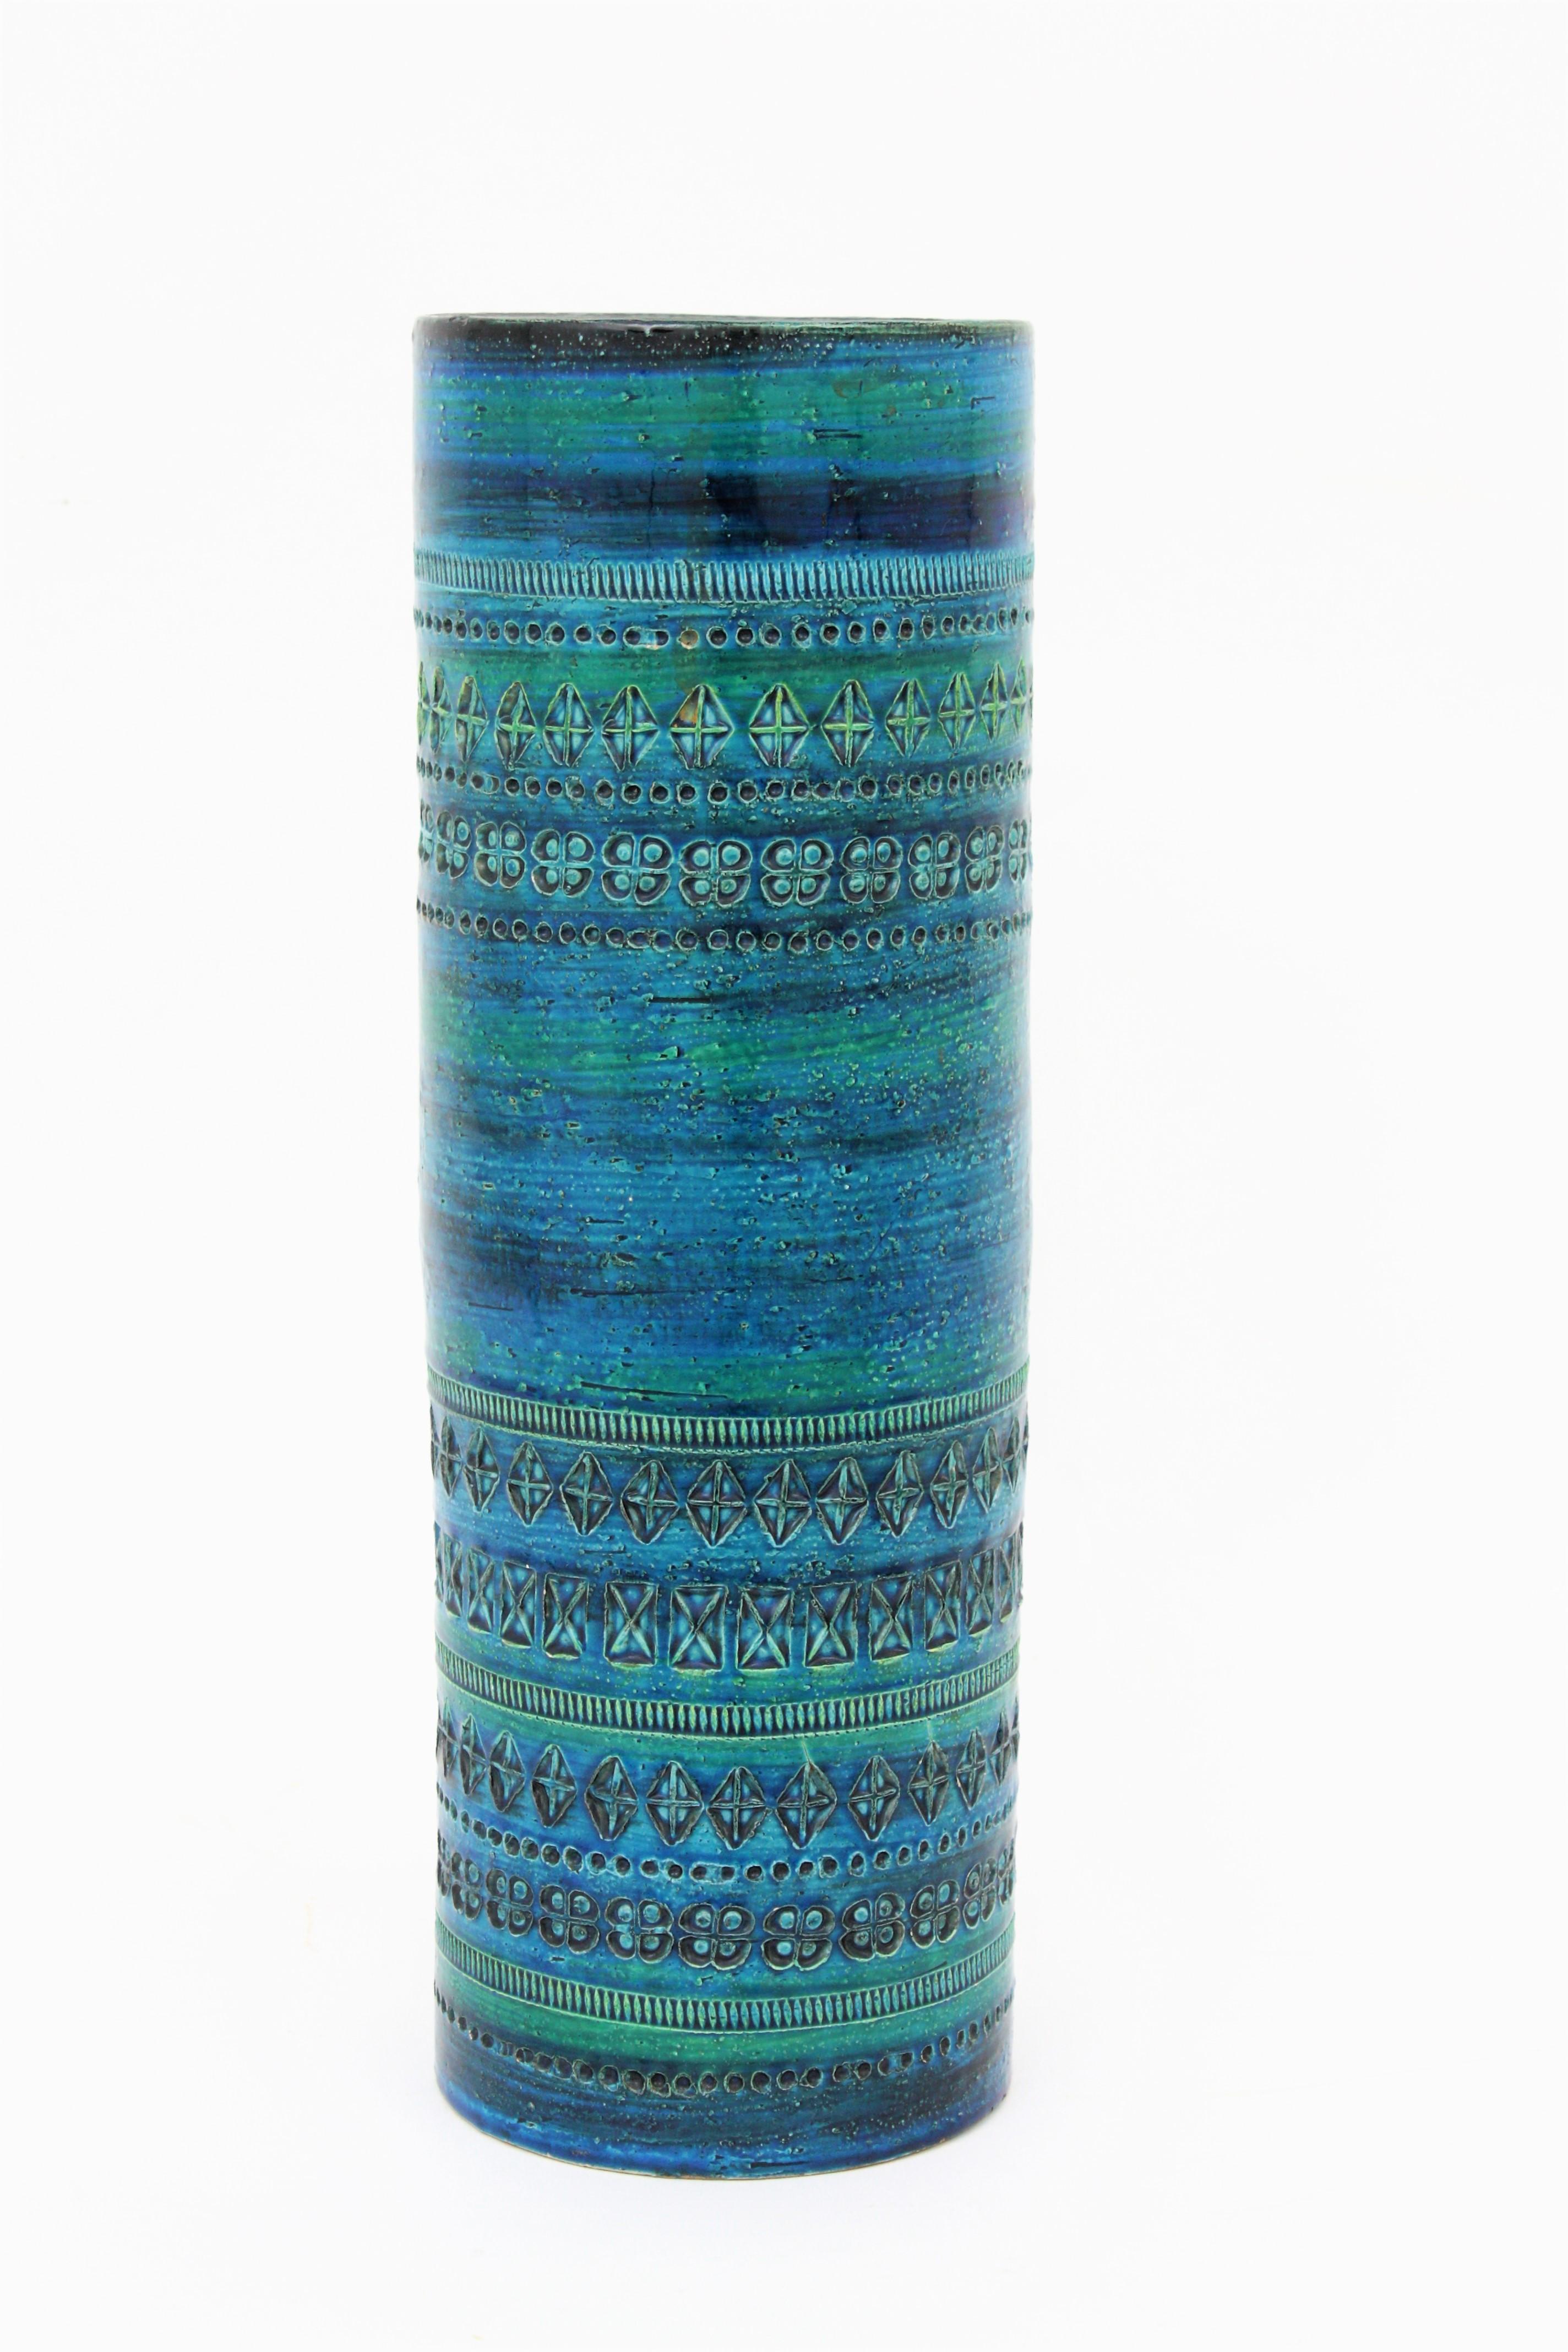 Italian Aldo Londi for Bitossi Rimini Blue Glazed Ceramic Extra Large Vase, Italy, 1960s